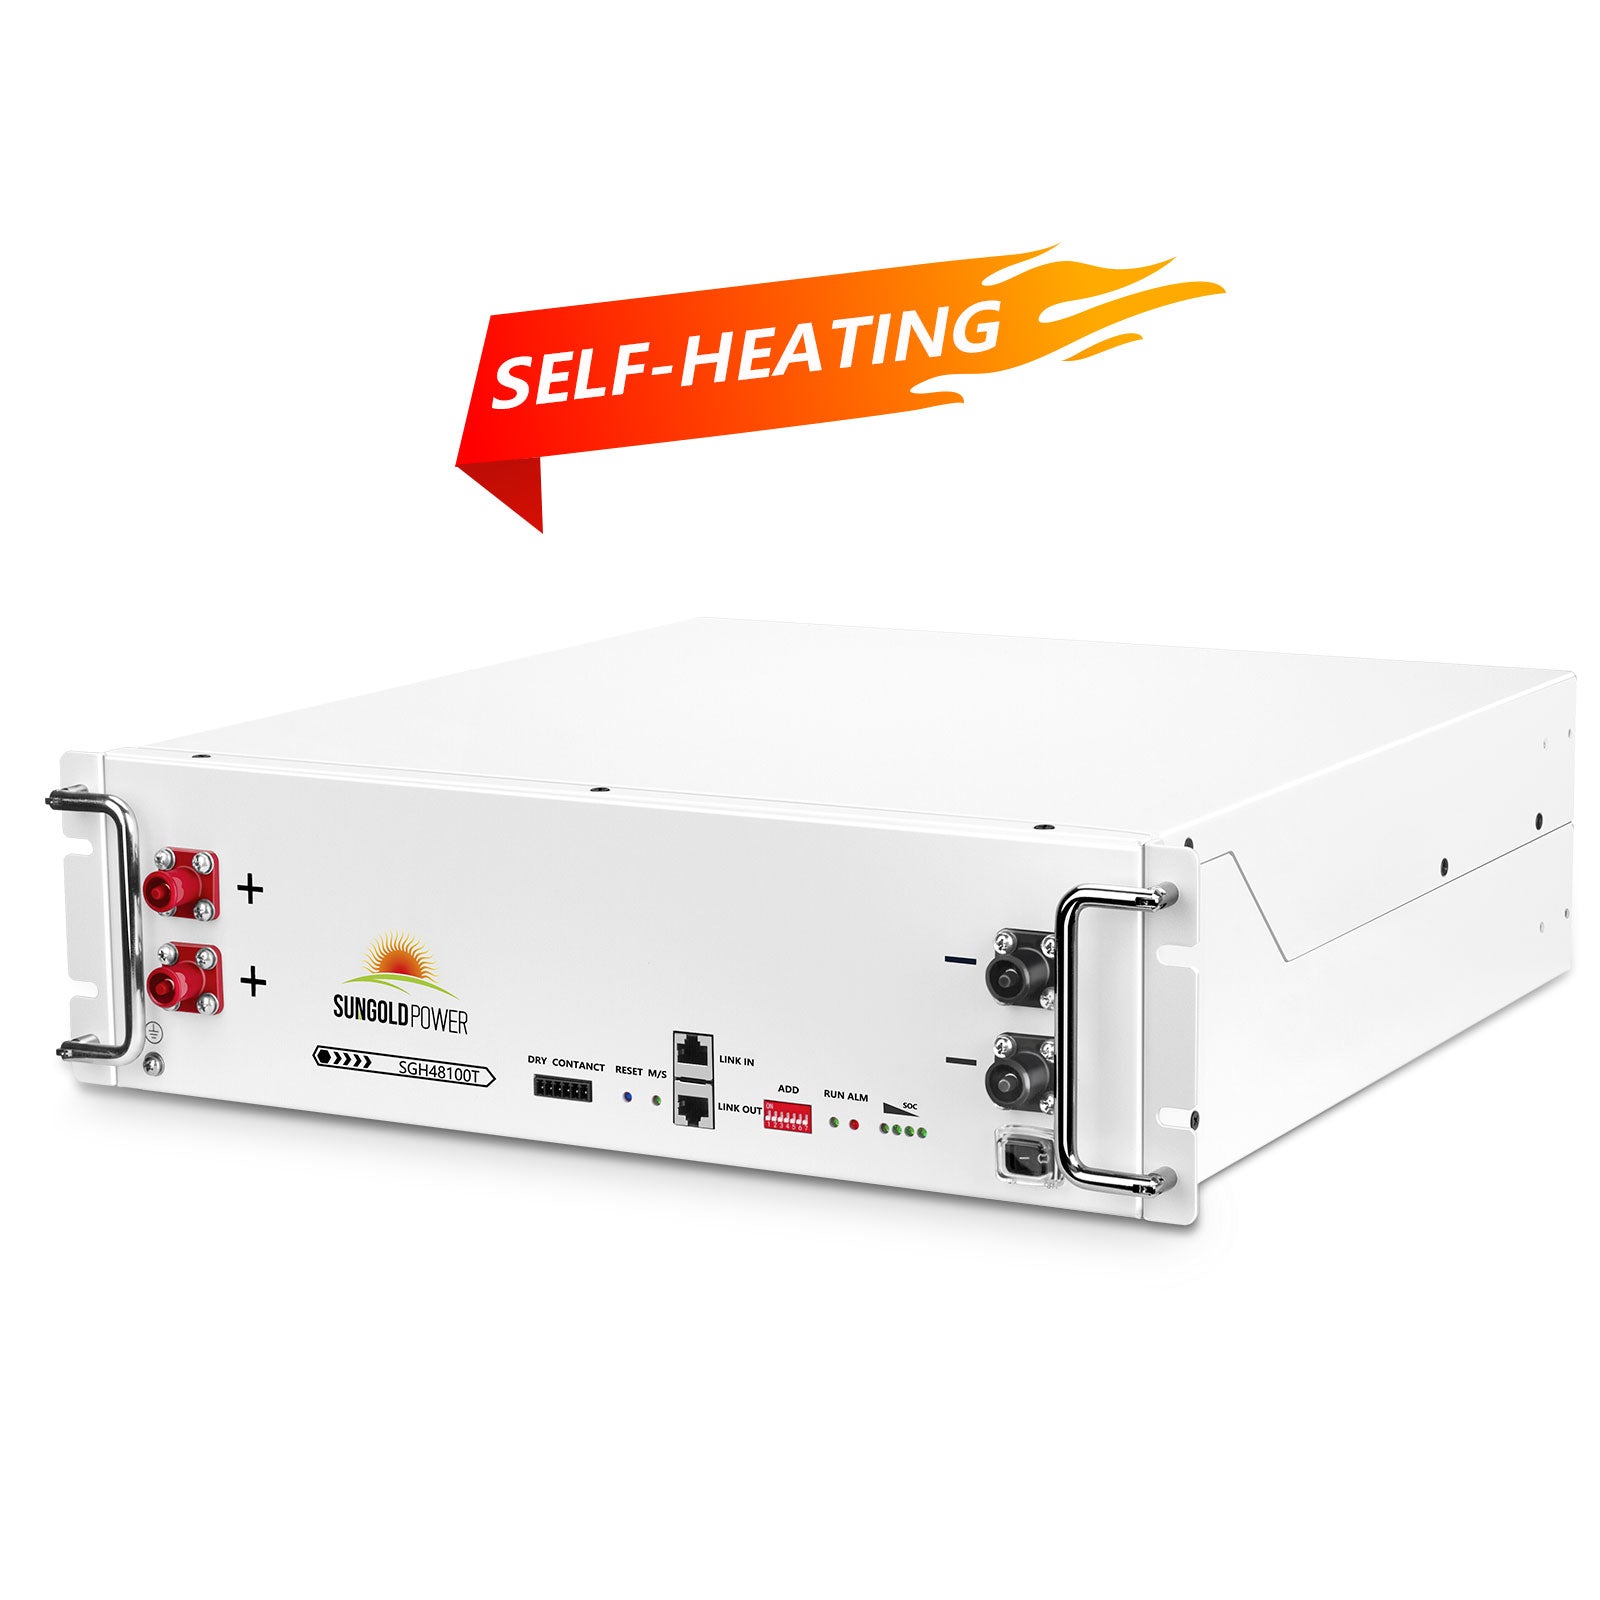 SGH48100T Server Rack 48V 100AH Lithium Battery Self-Heating